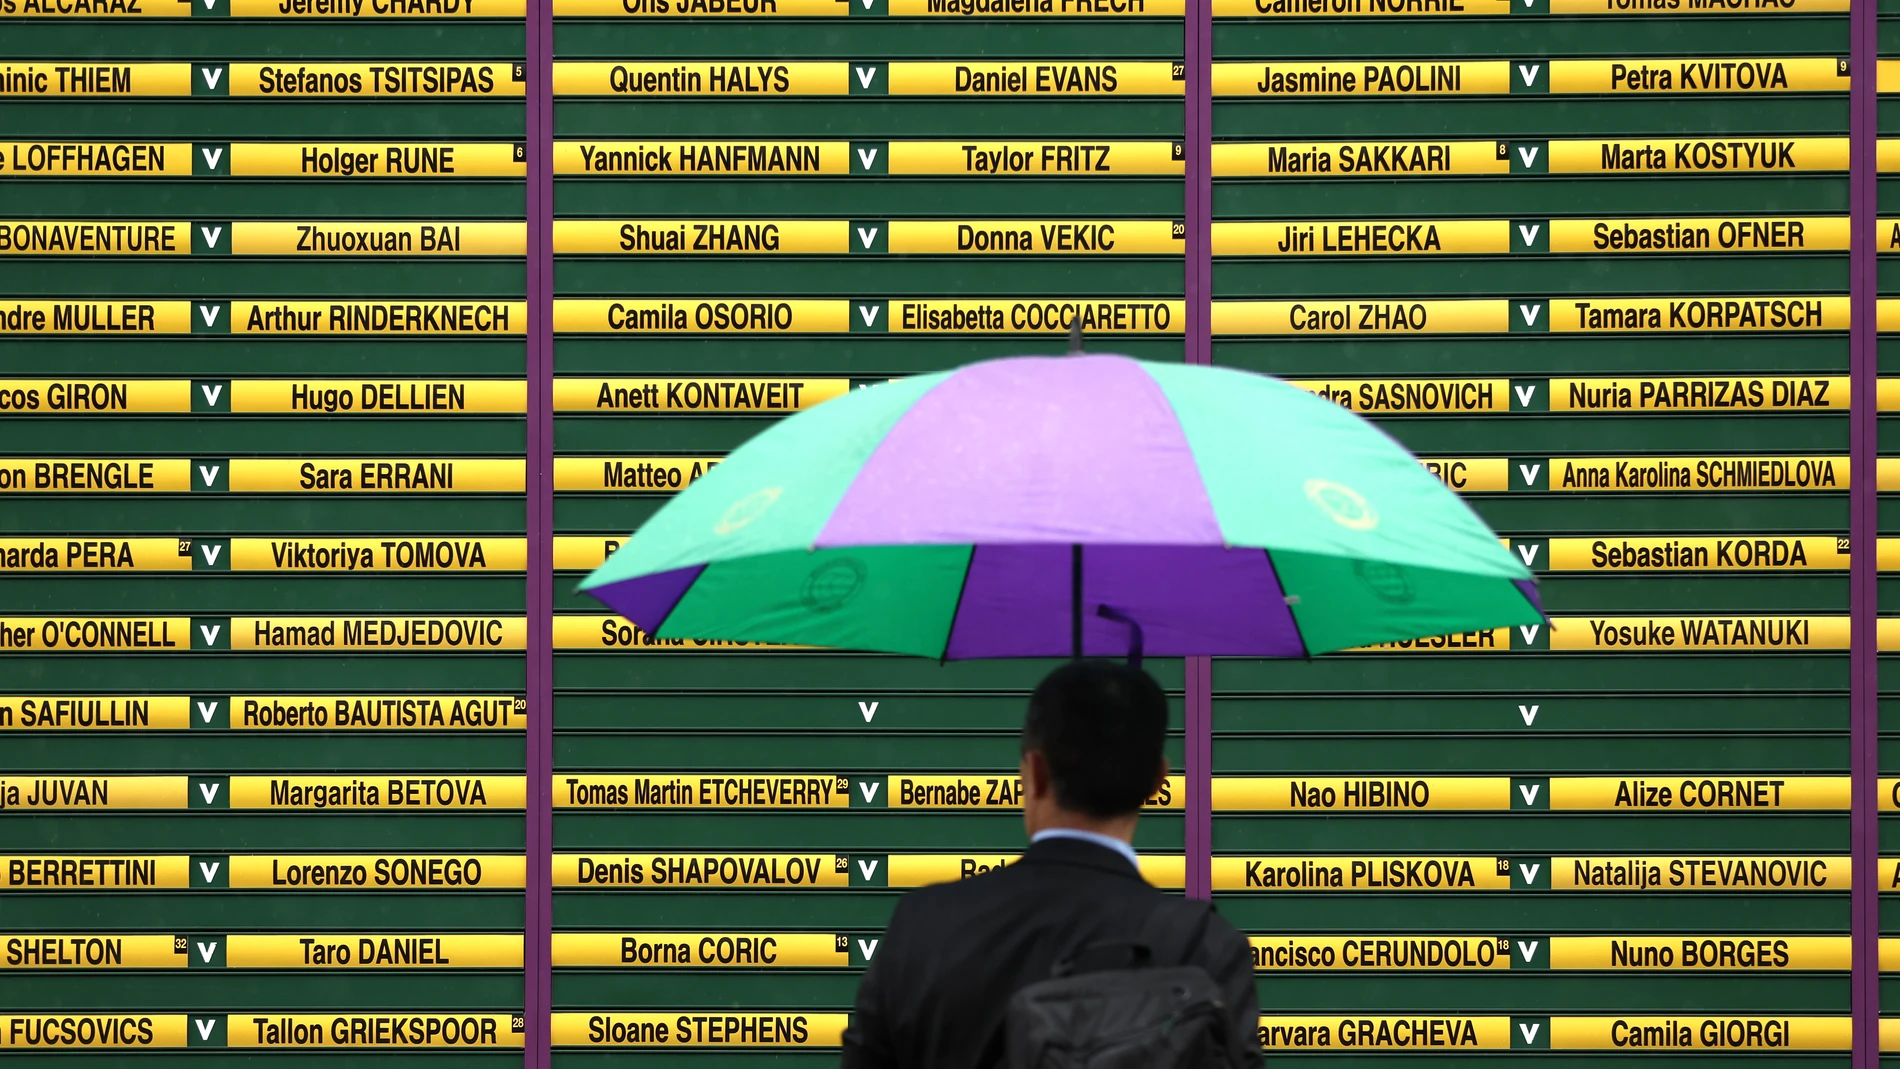 Histórica jornada en Wimbledon: ¡Se jugarán casi 90 partidos!